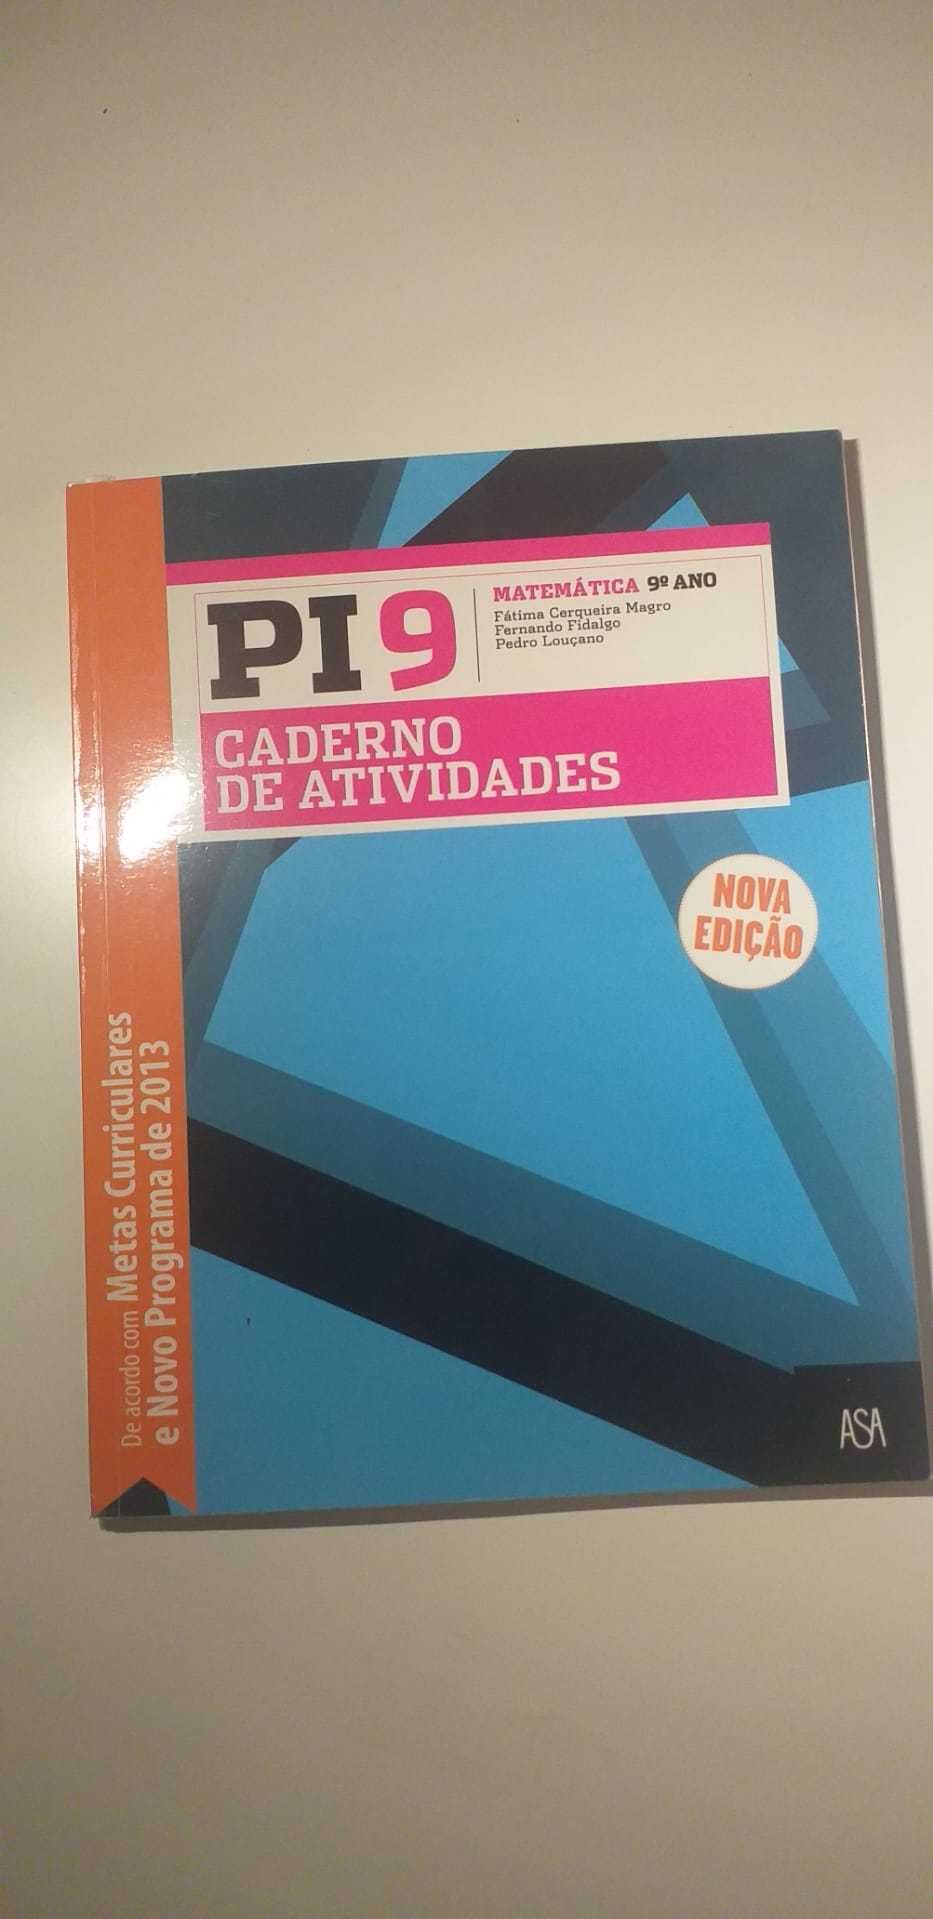 Matemática Pi 9 caderno actividades